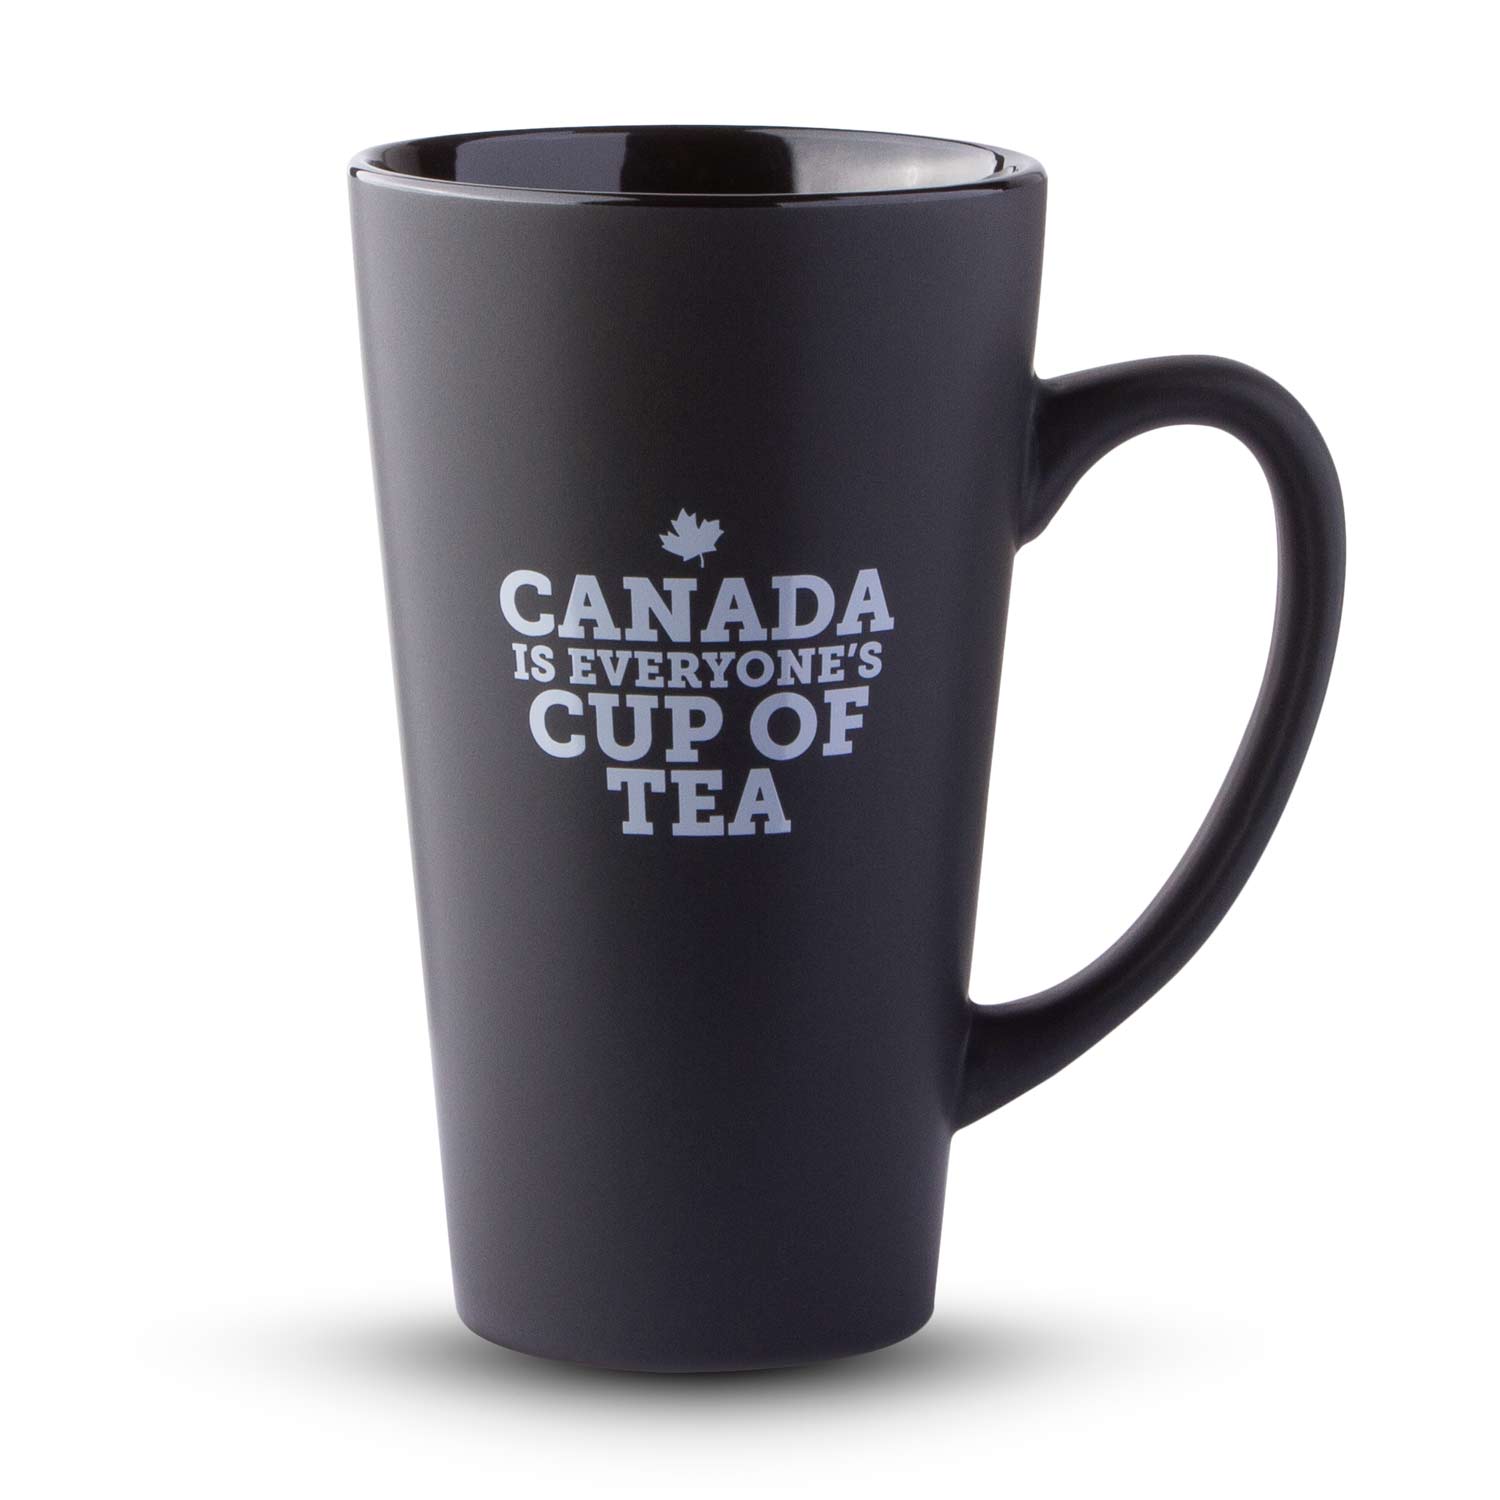 https://shop.legionmagazine.com/wp-content/uploads/2022/02/Canada-is-everyonescupoftea-mug.jpg